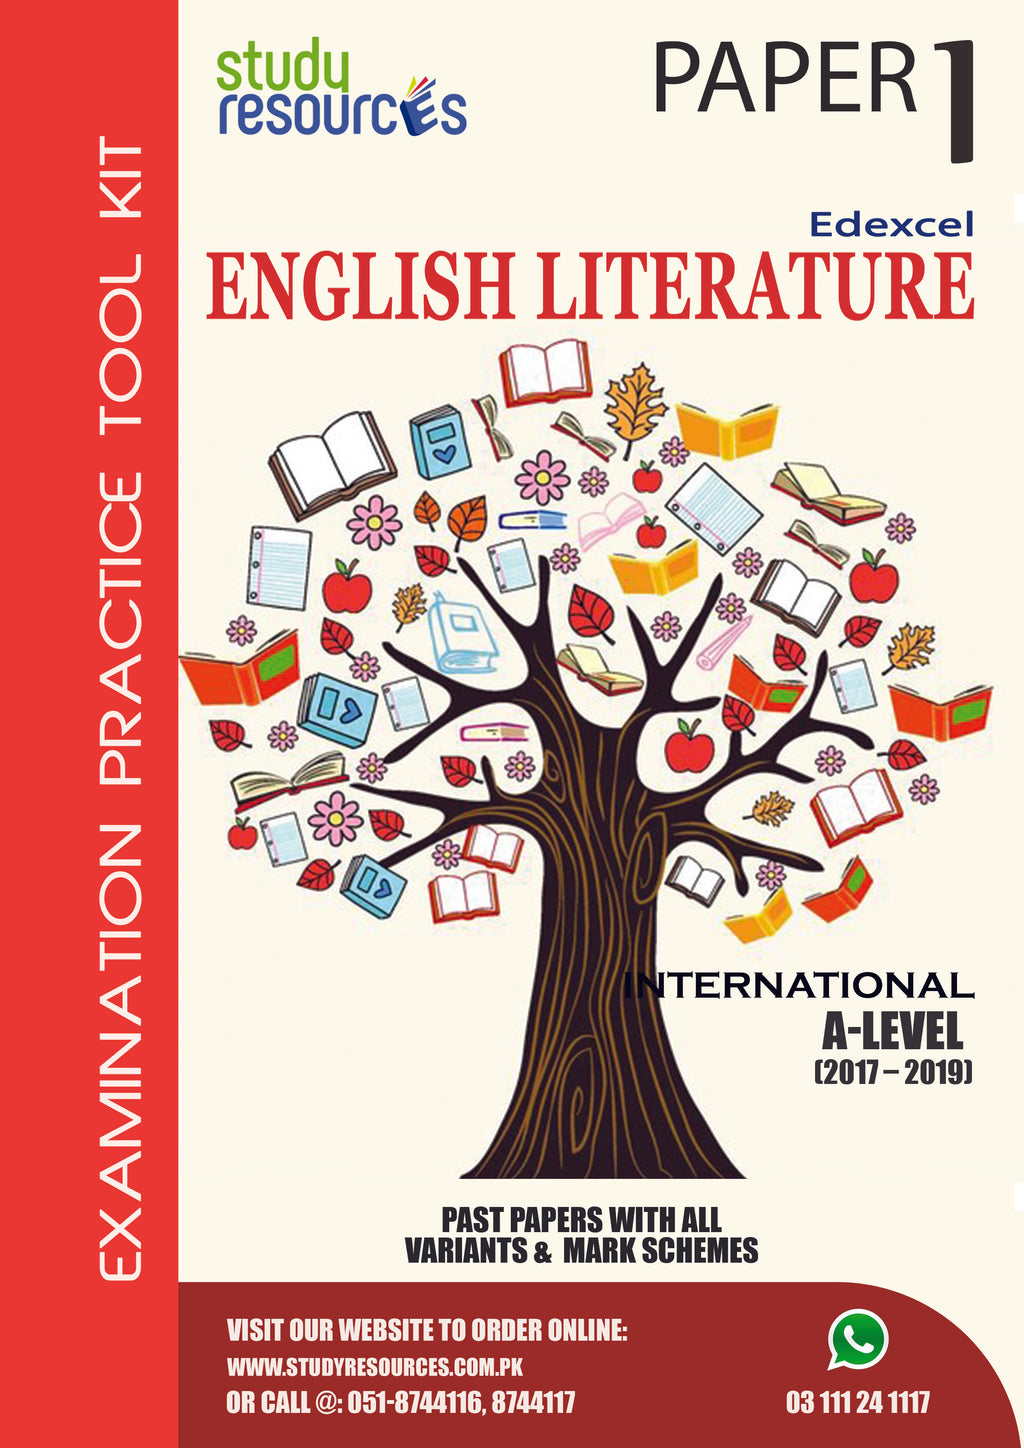 Edexcel A-Level English Literature P-1 Past Papers (2017-2019)